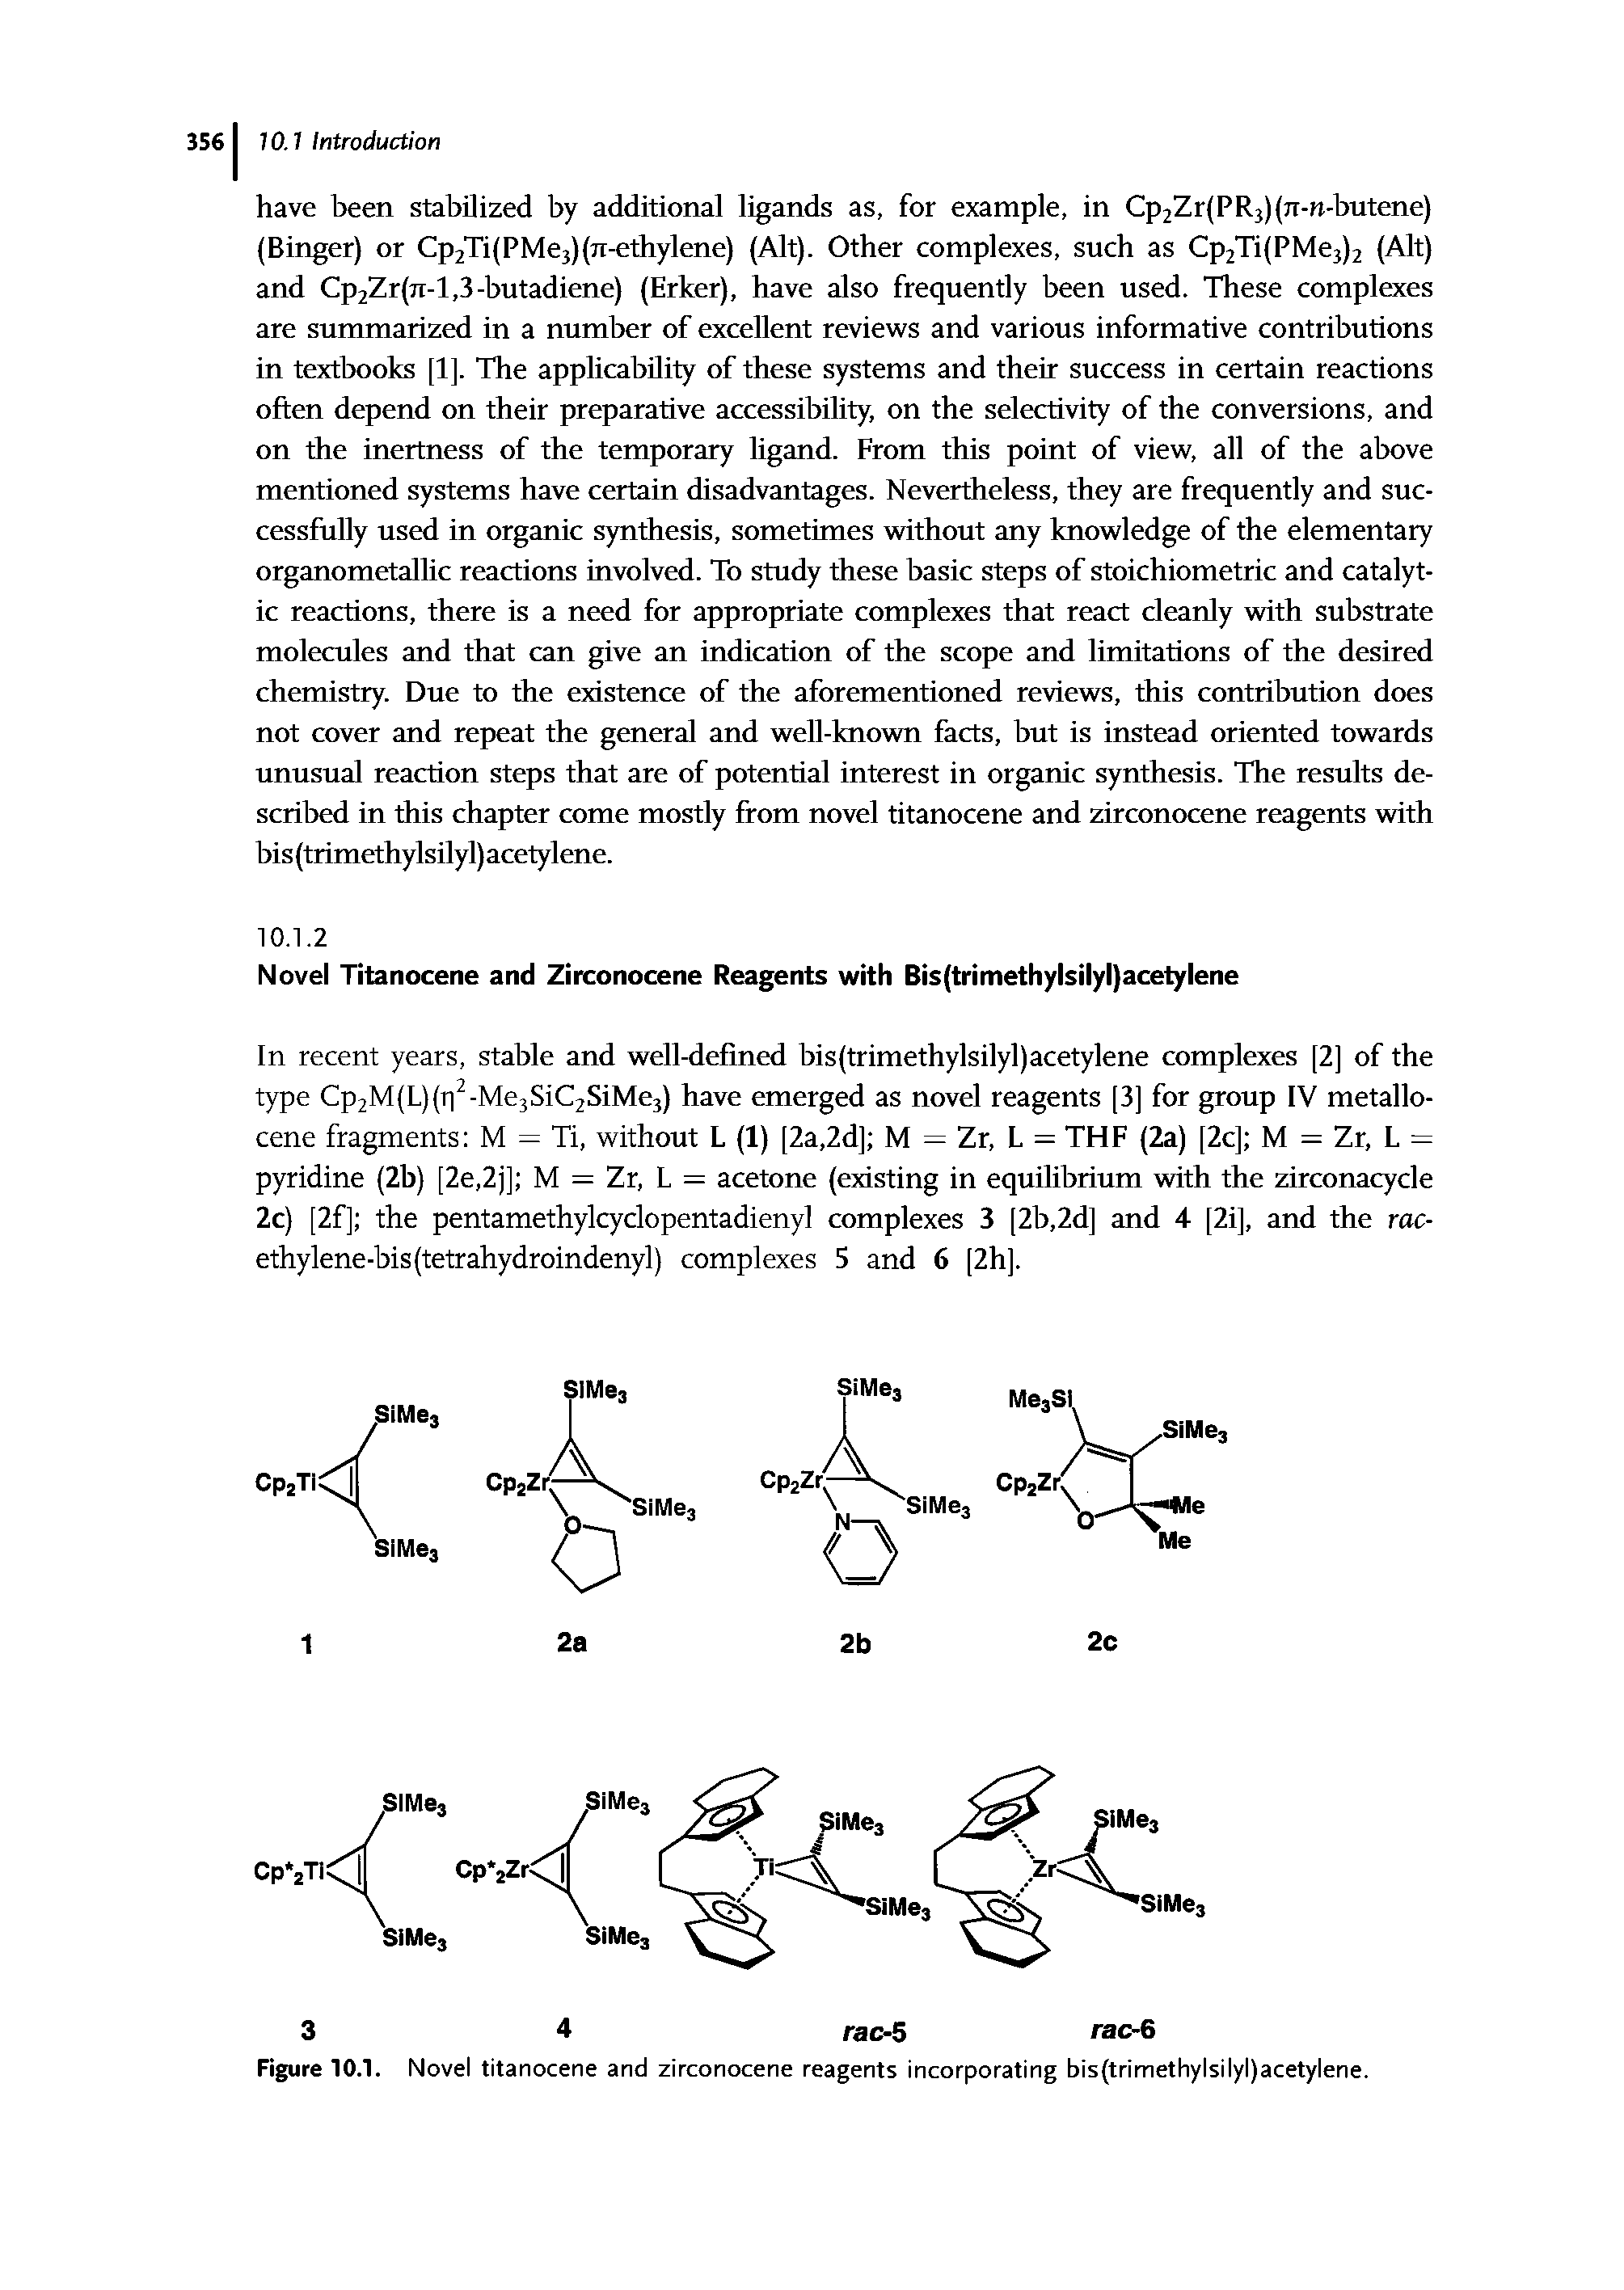 Figure 10.1. Novel titanocene and zirconocene reagents incorporating bis(trimethylsilyl)acetylene.